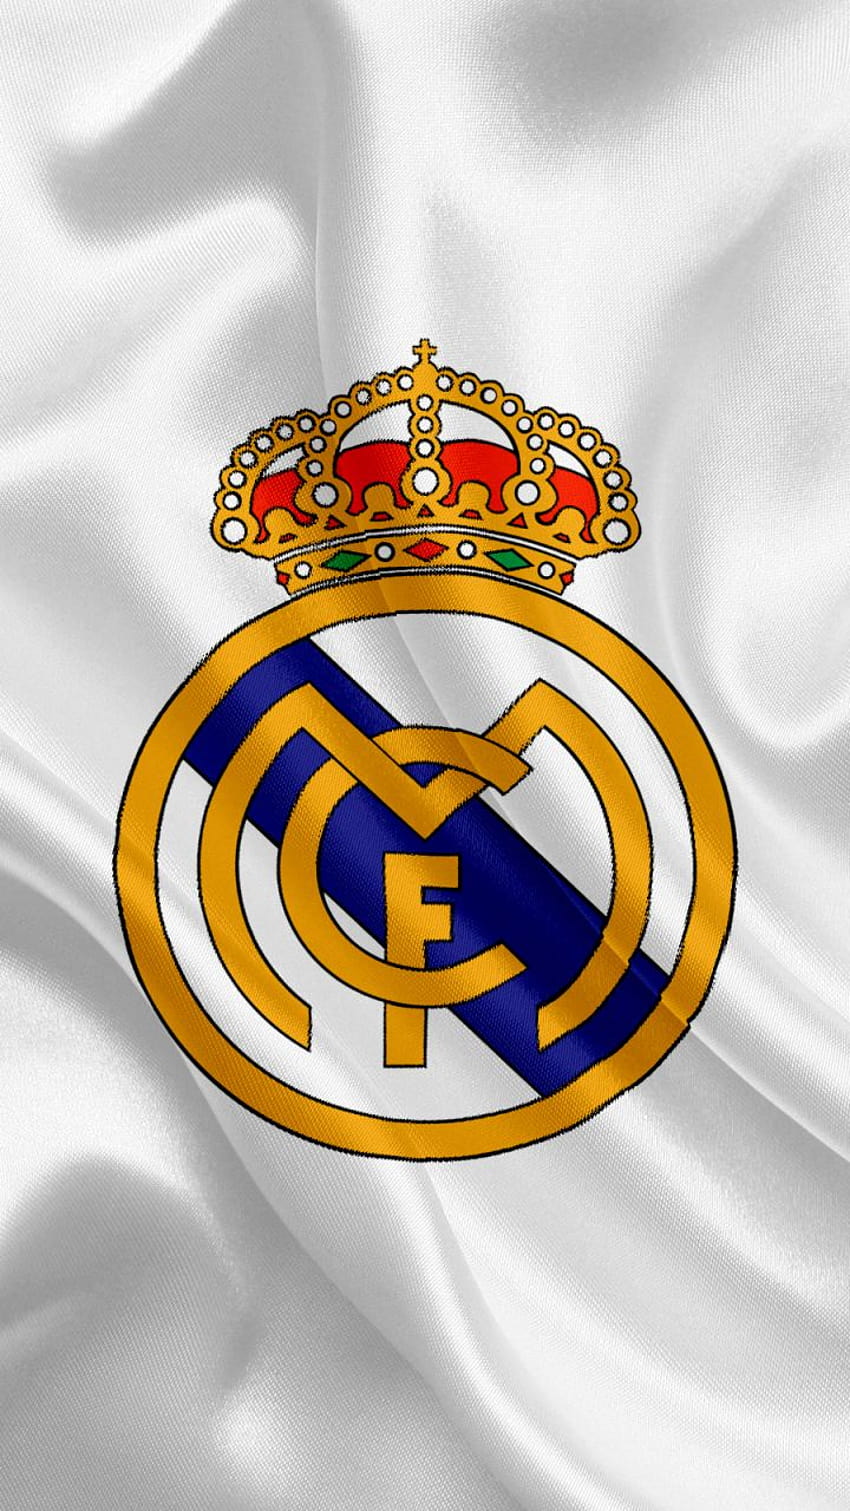 Escudo del Real Madrid  Fondos del real madrid